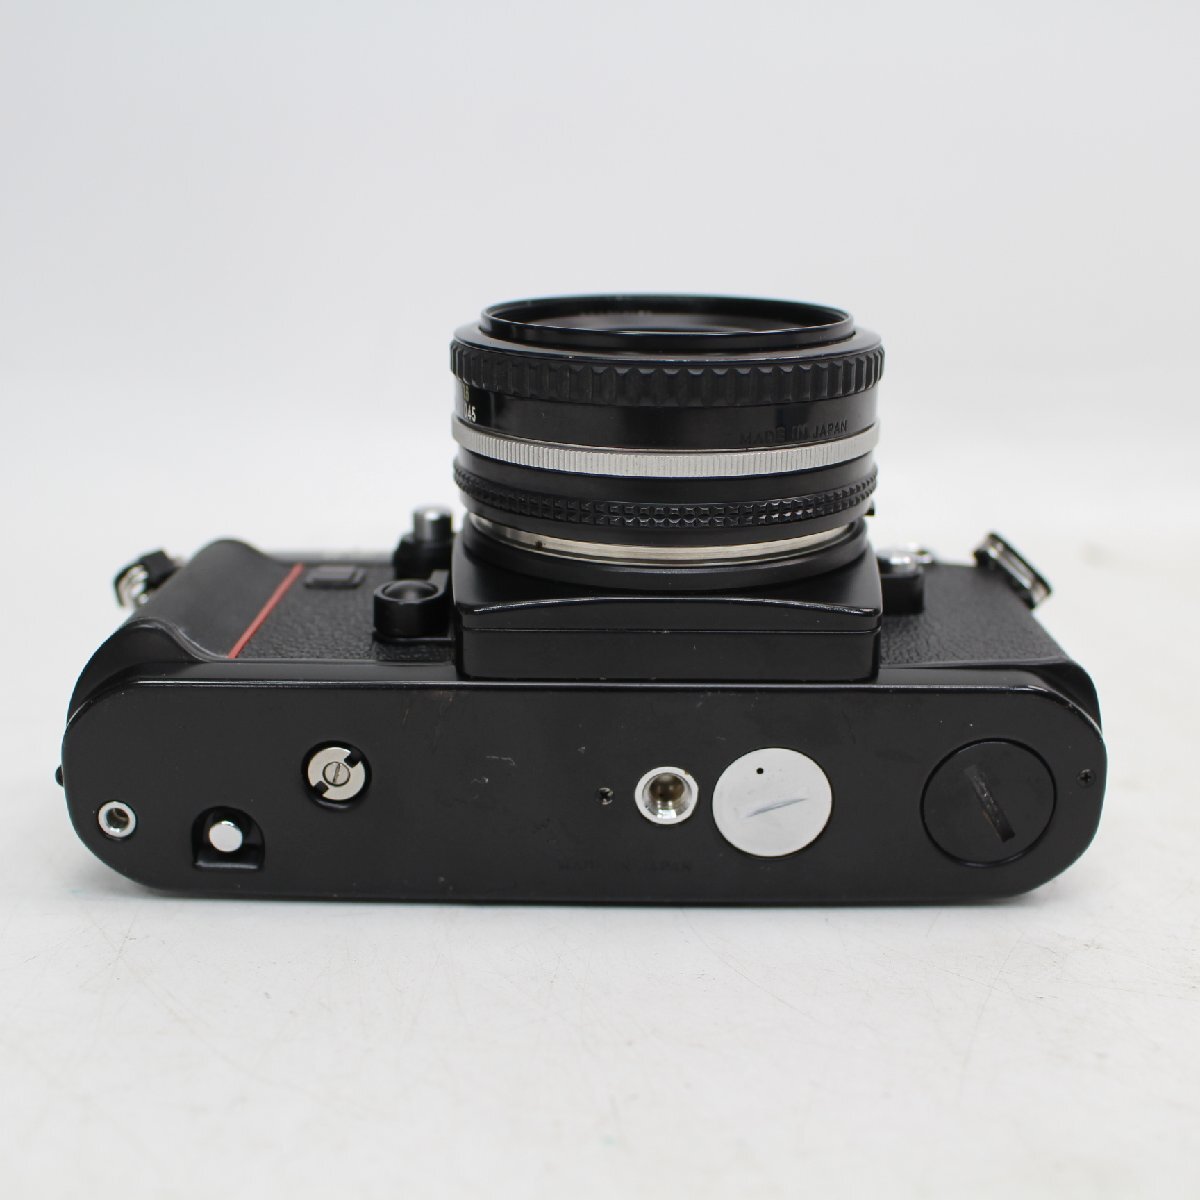 336)[1 jpy start!]Nikon Nikon F3 single‐lens reflex film camera NIKKOR 50mm 1:1.8